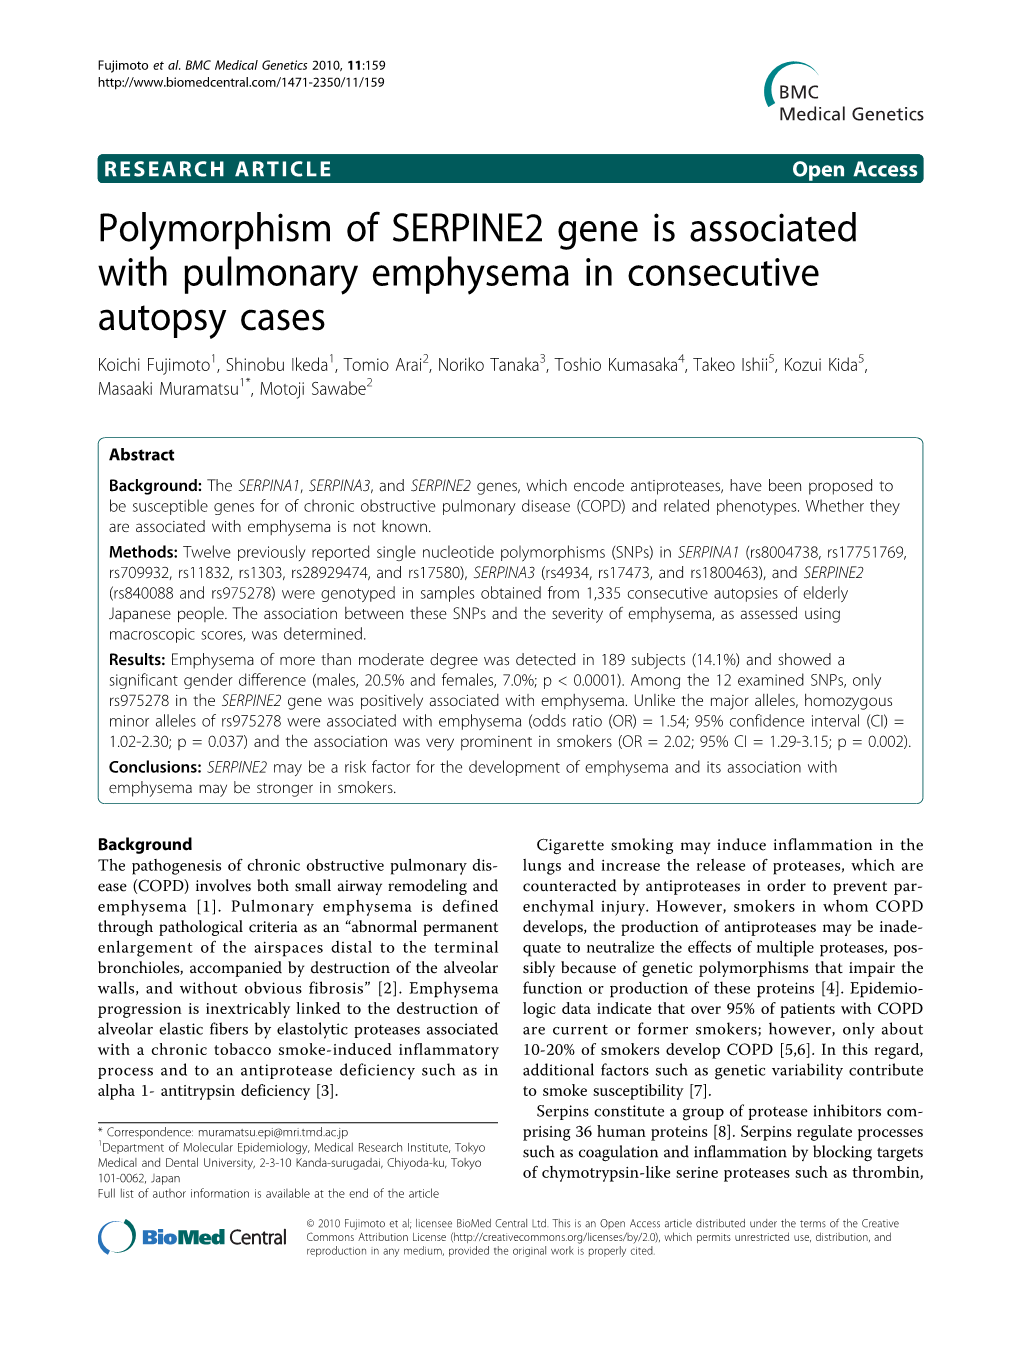 Polymorphism of SERPINE2 Gene Is Associated with Pulmonary